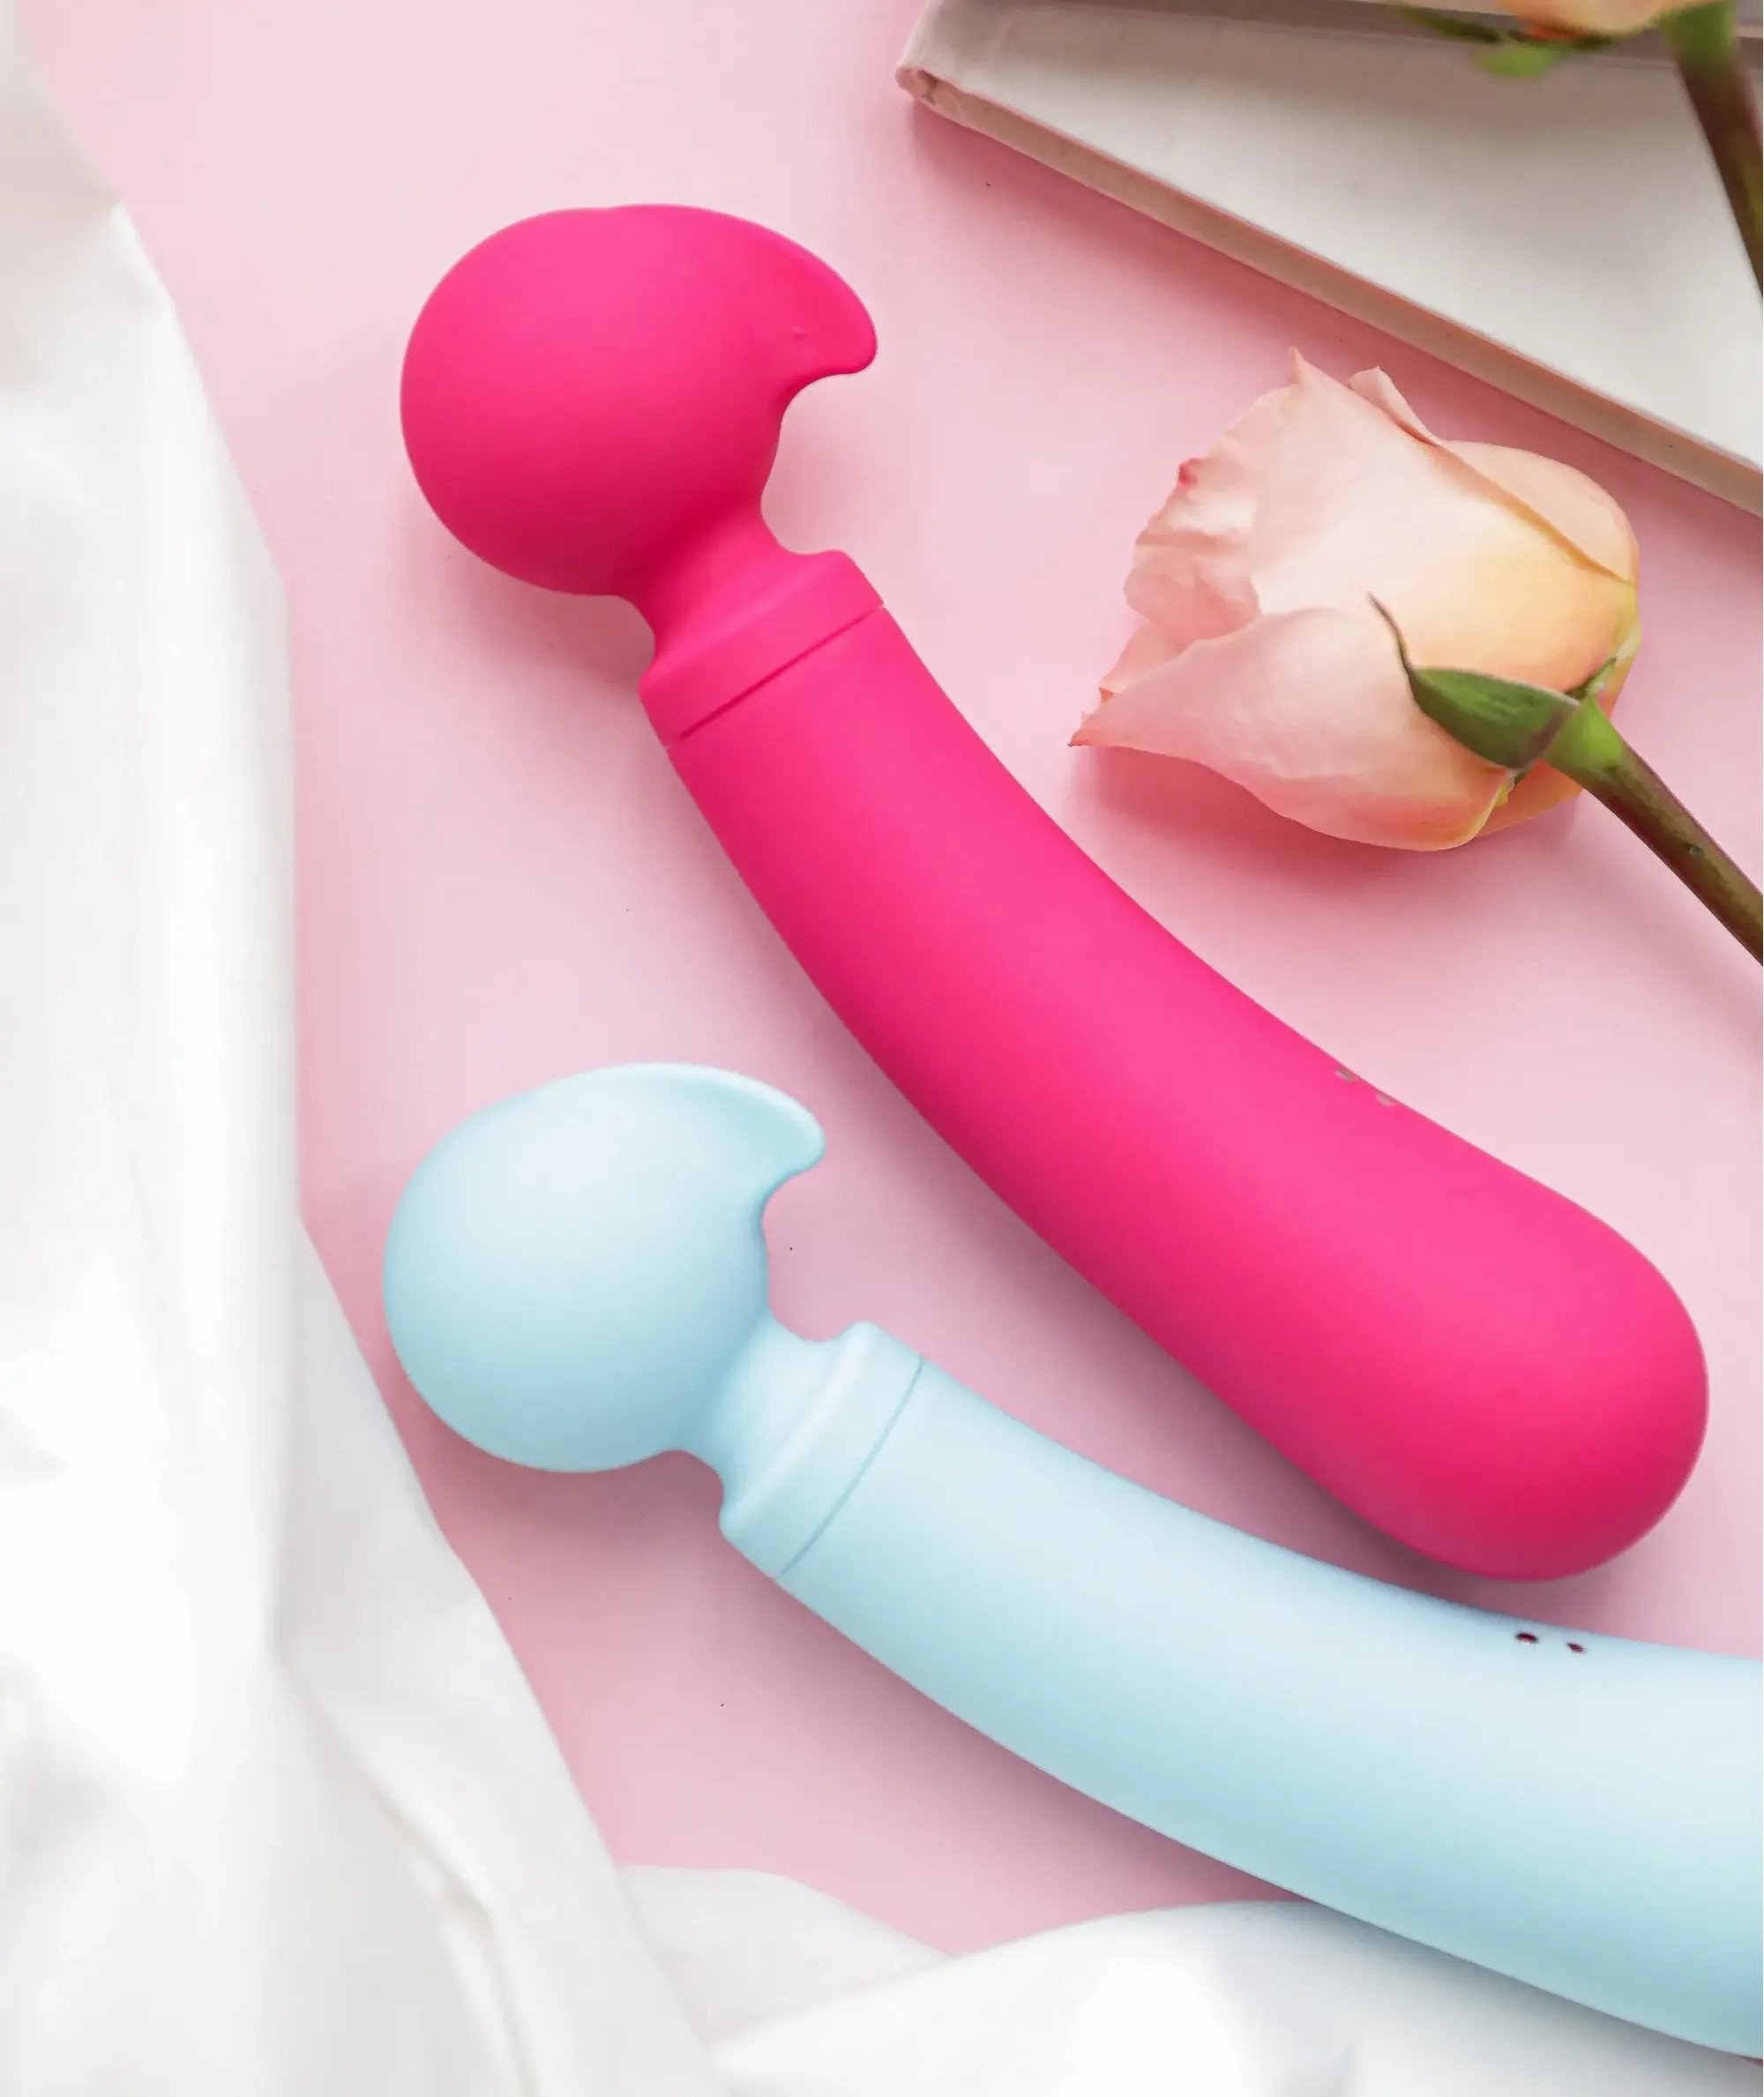 Blue and pink wand vibrators